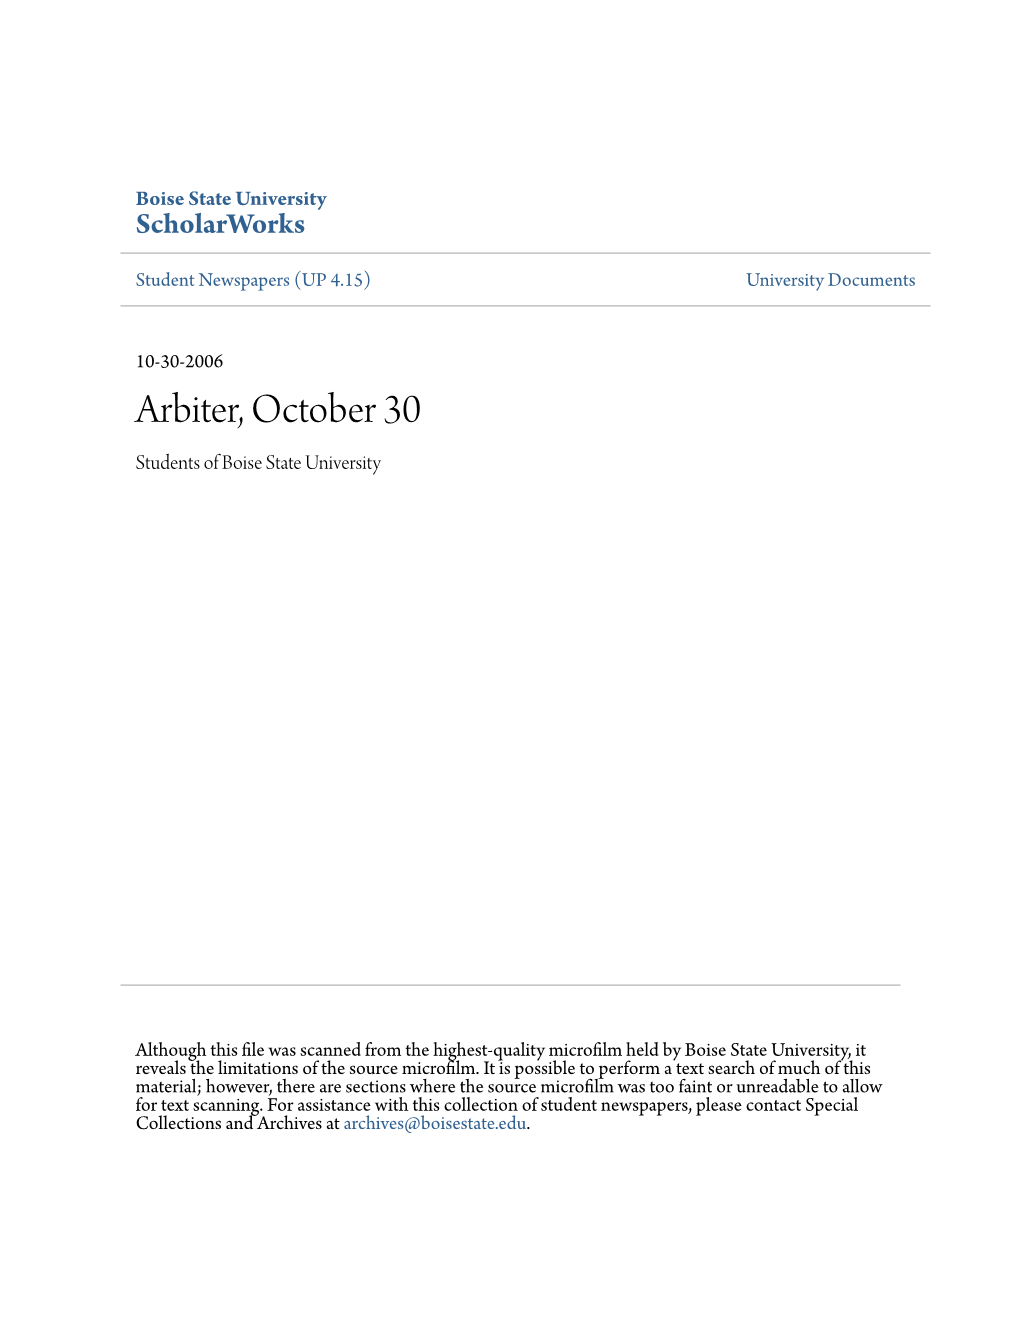 Arbiter, October 30 Students of Boise State University